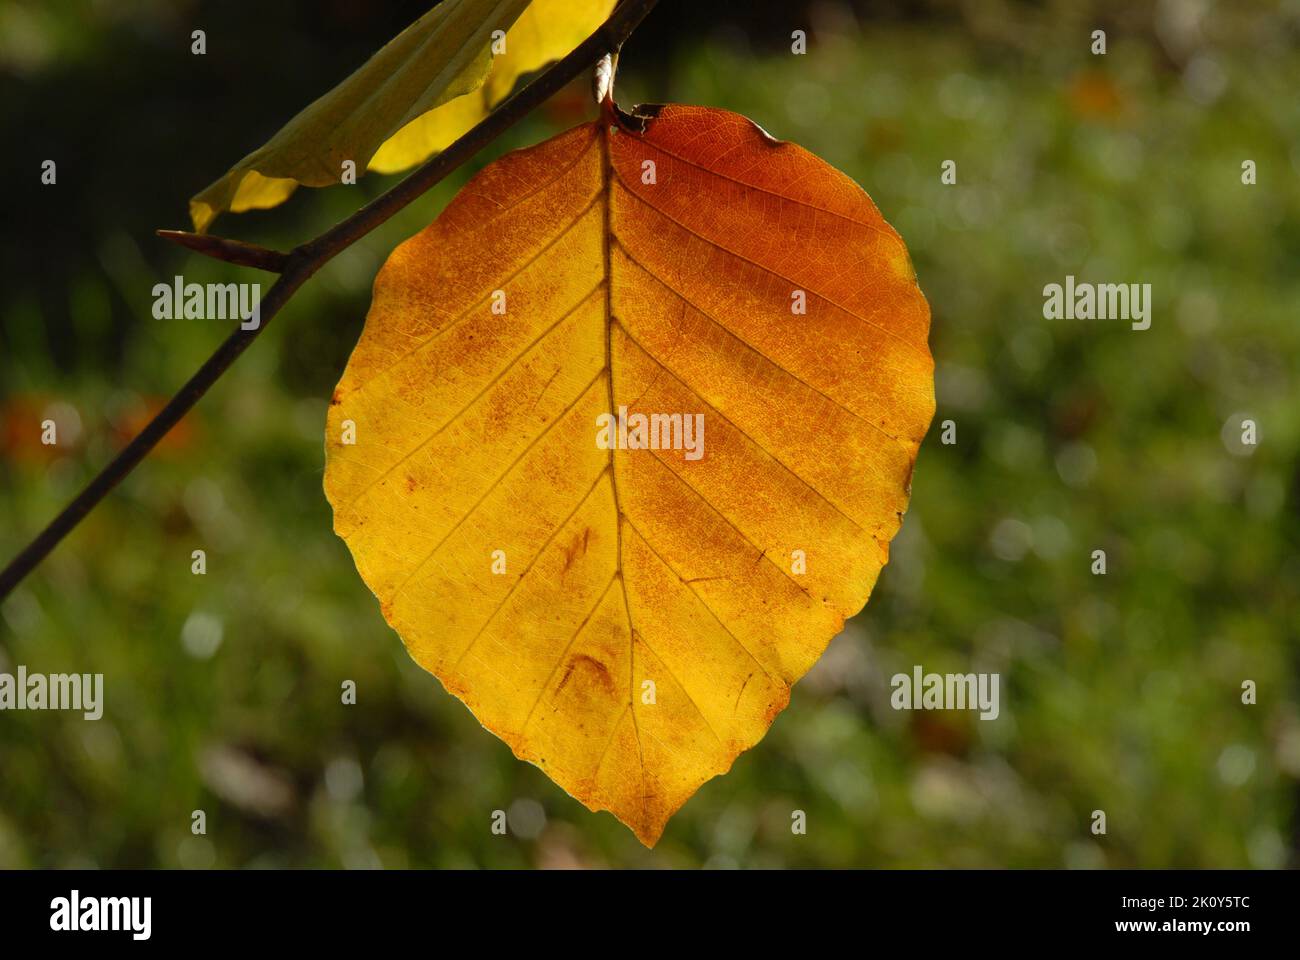 Single golden autumn leaf on twig Stock Photo